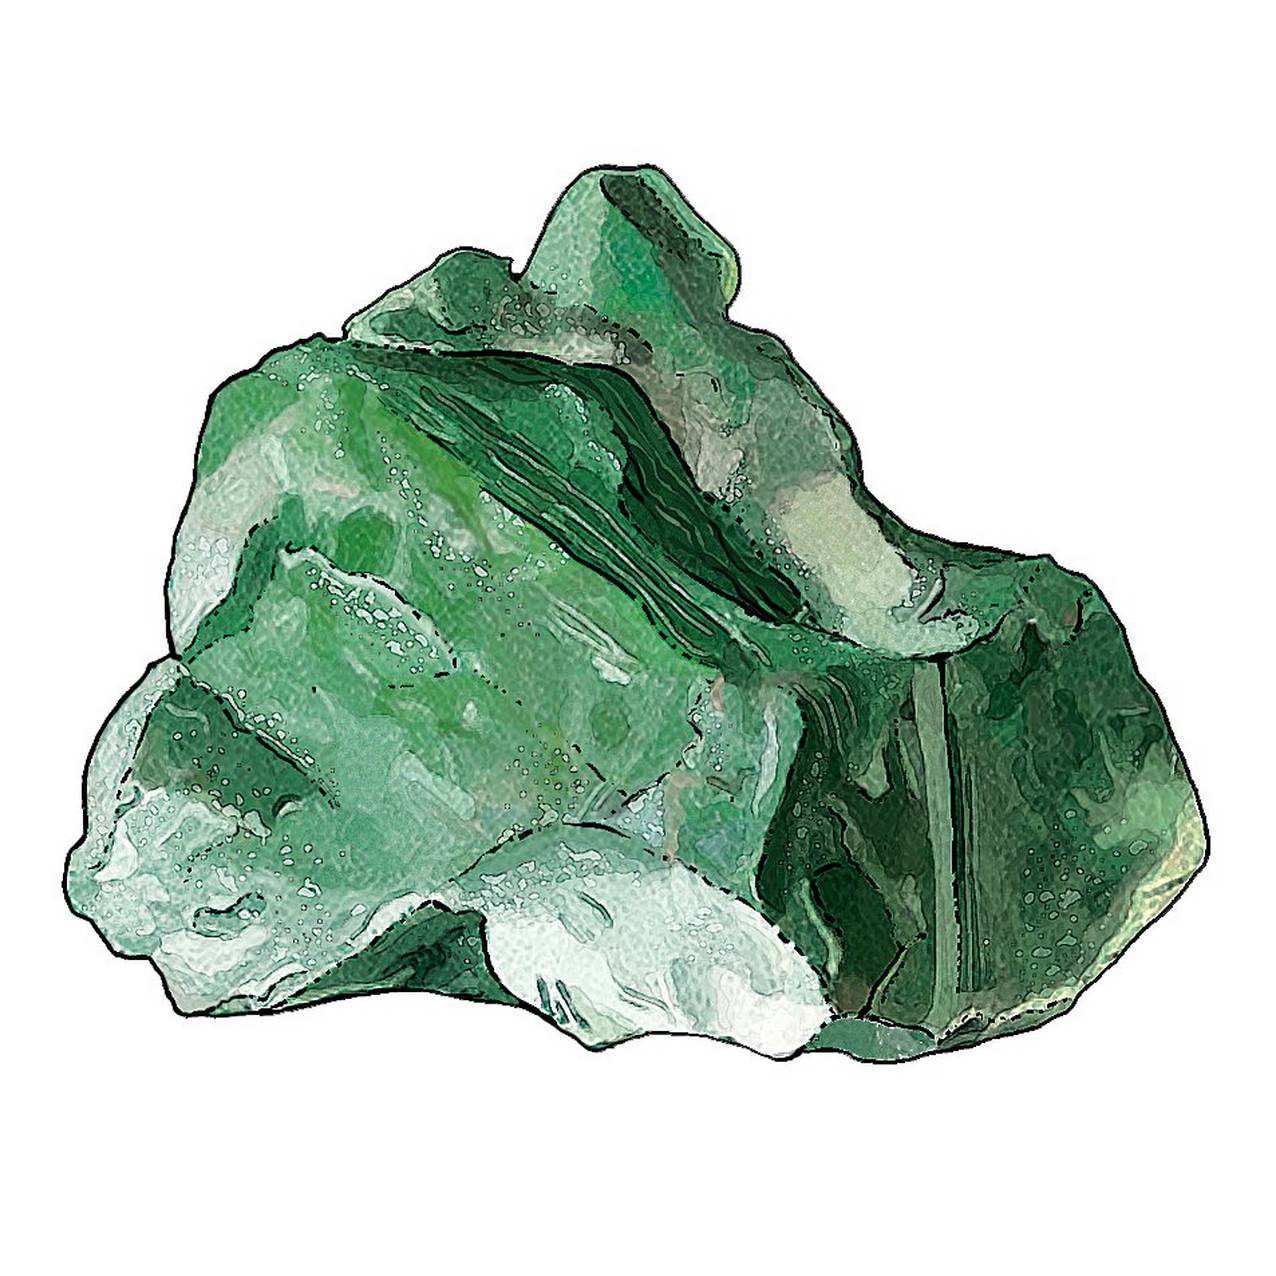 Illustration of piece of jade